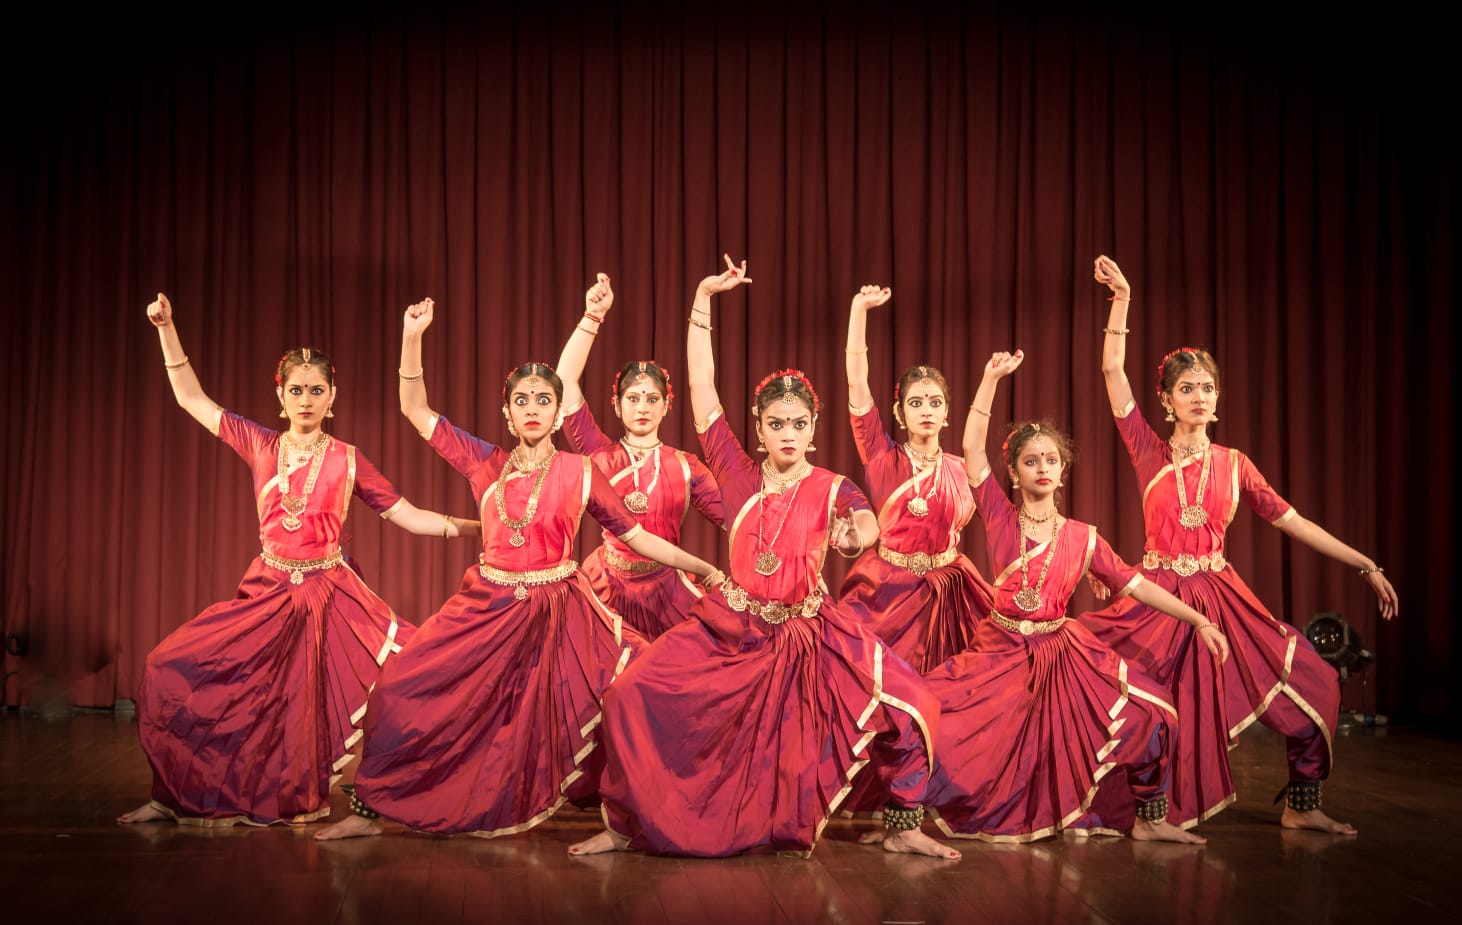 Aayam Dance Troupe brings a special Bharatanatyam dance production to celebrate Akshay Tritya